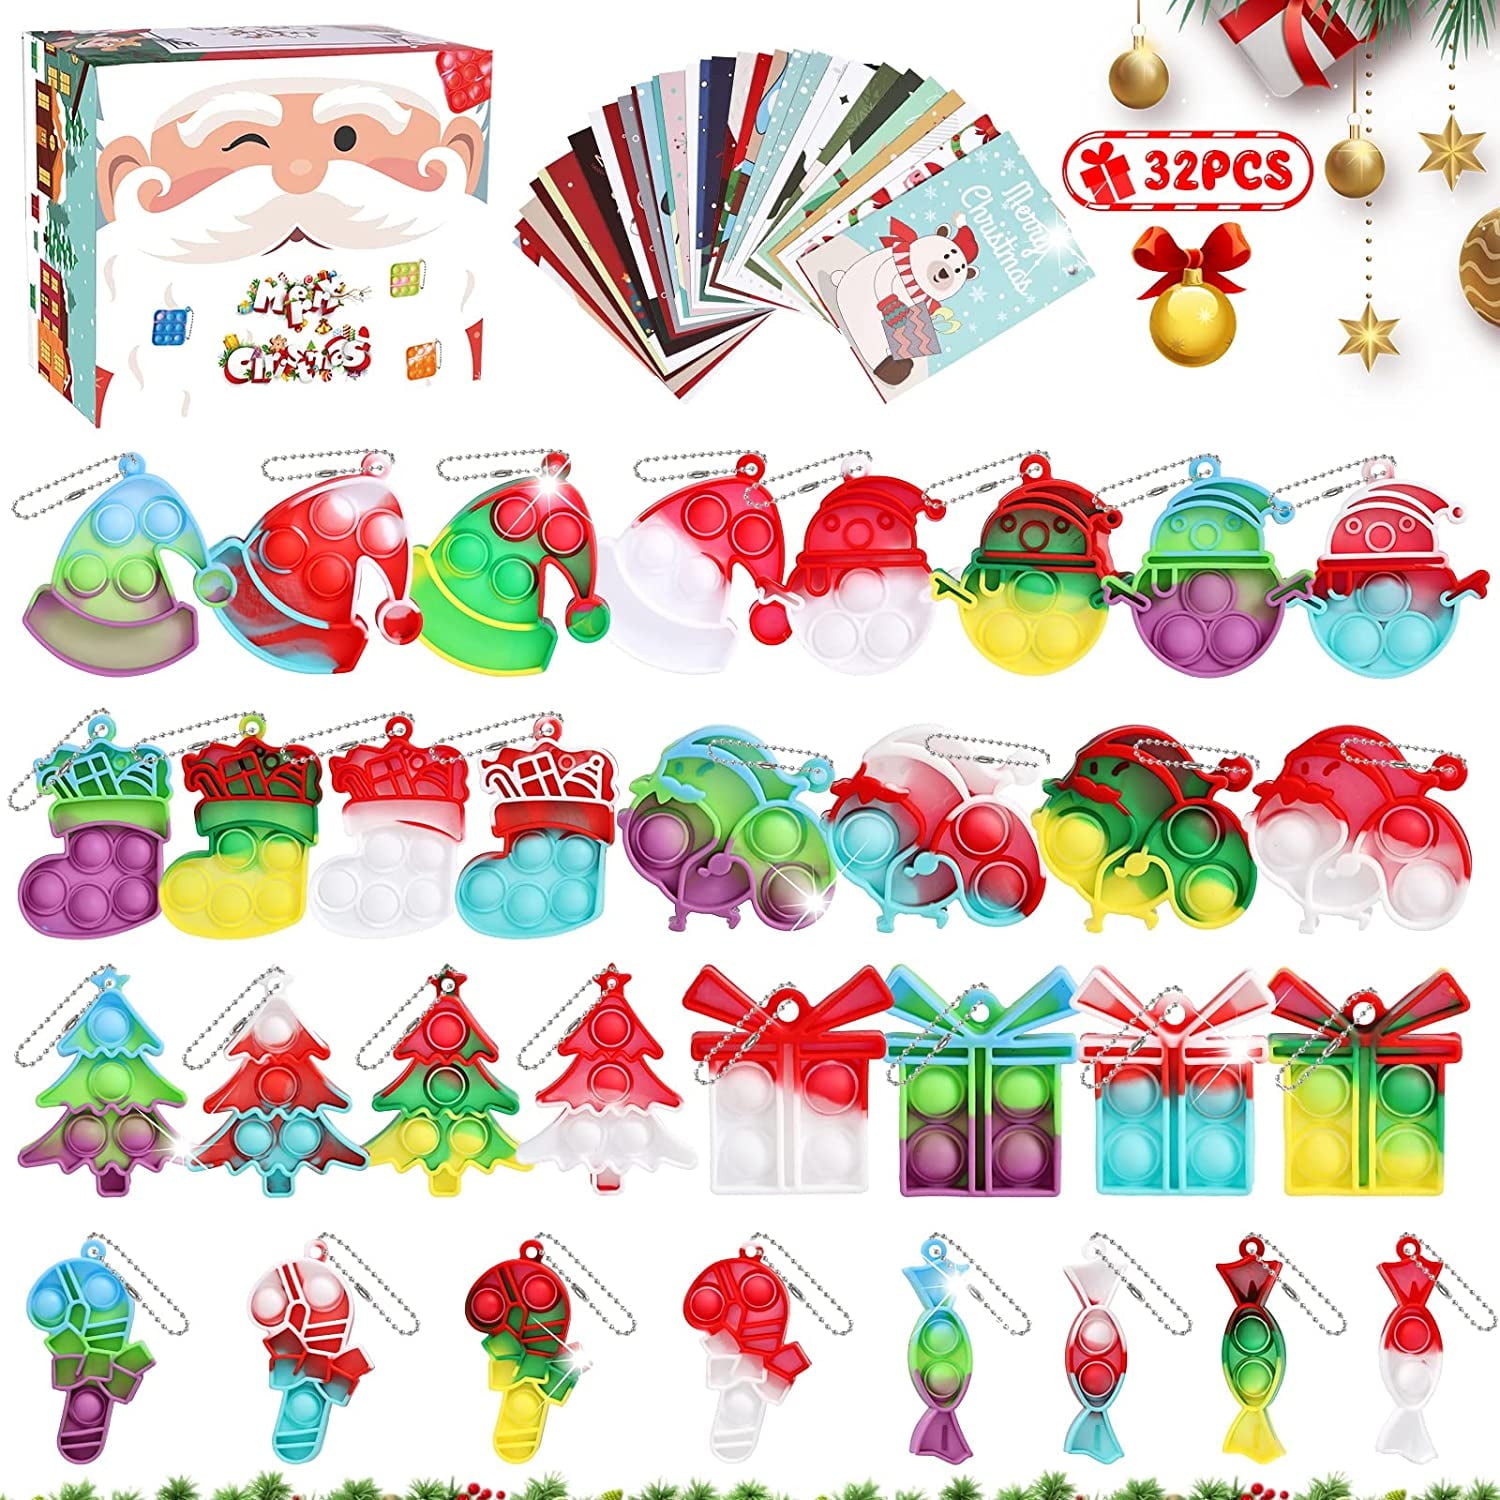 Terra 32Pcs Christmas Mini Pop Fidget Keychain Bulk, Mini Pop Bubble Fidget Toys, Christmas Stocking Stuffers for Kids Party Favors Supplies Goodies Bag Stuffers Xmas Gift for Kids